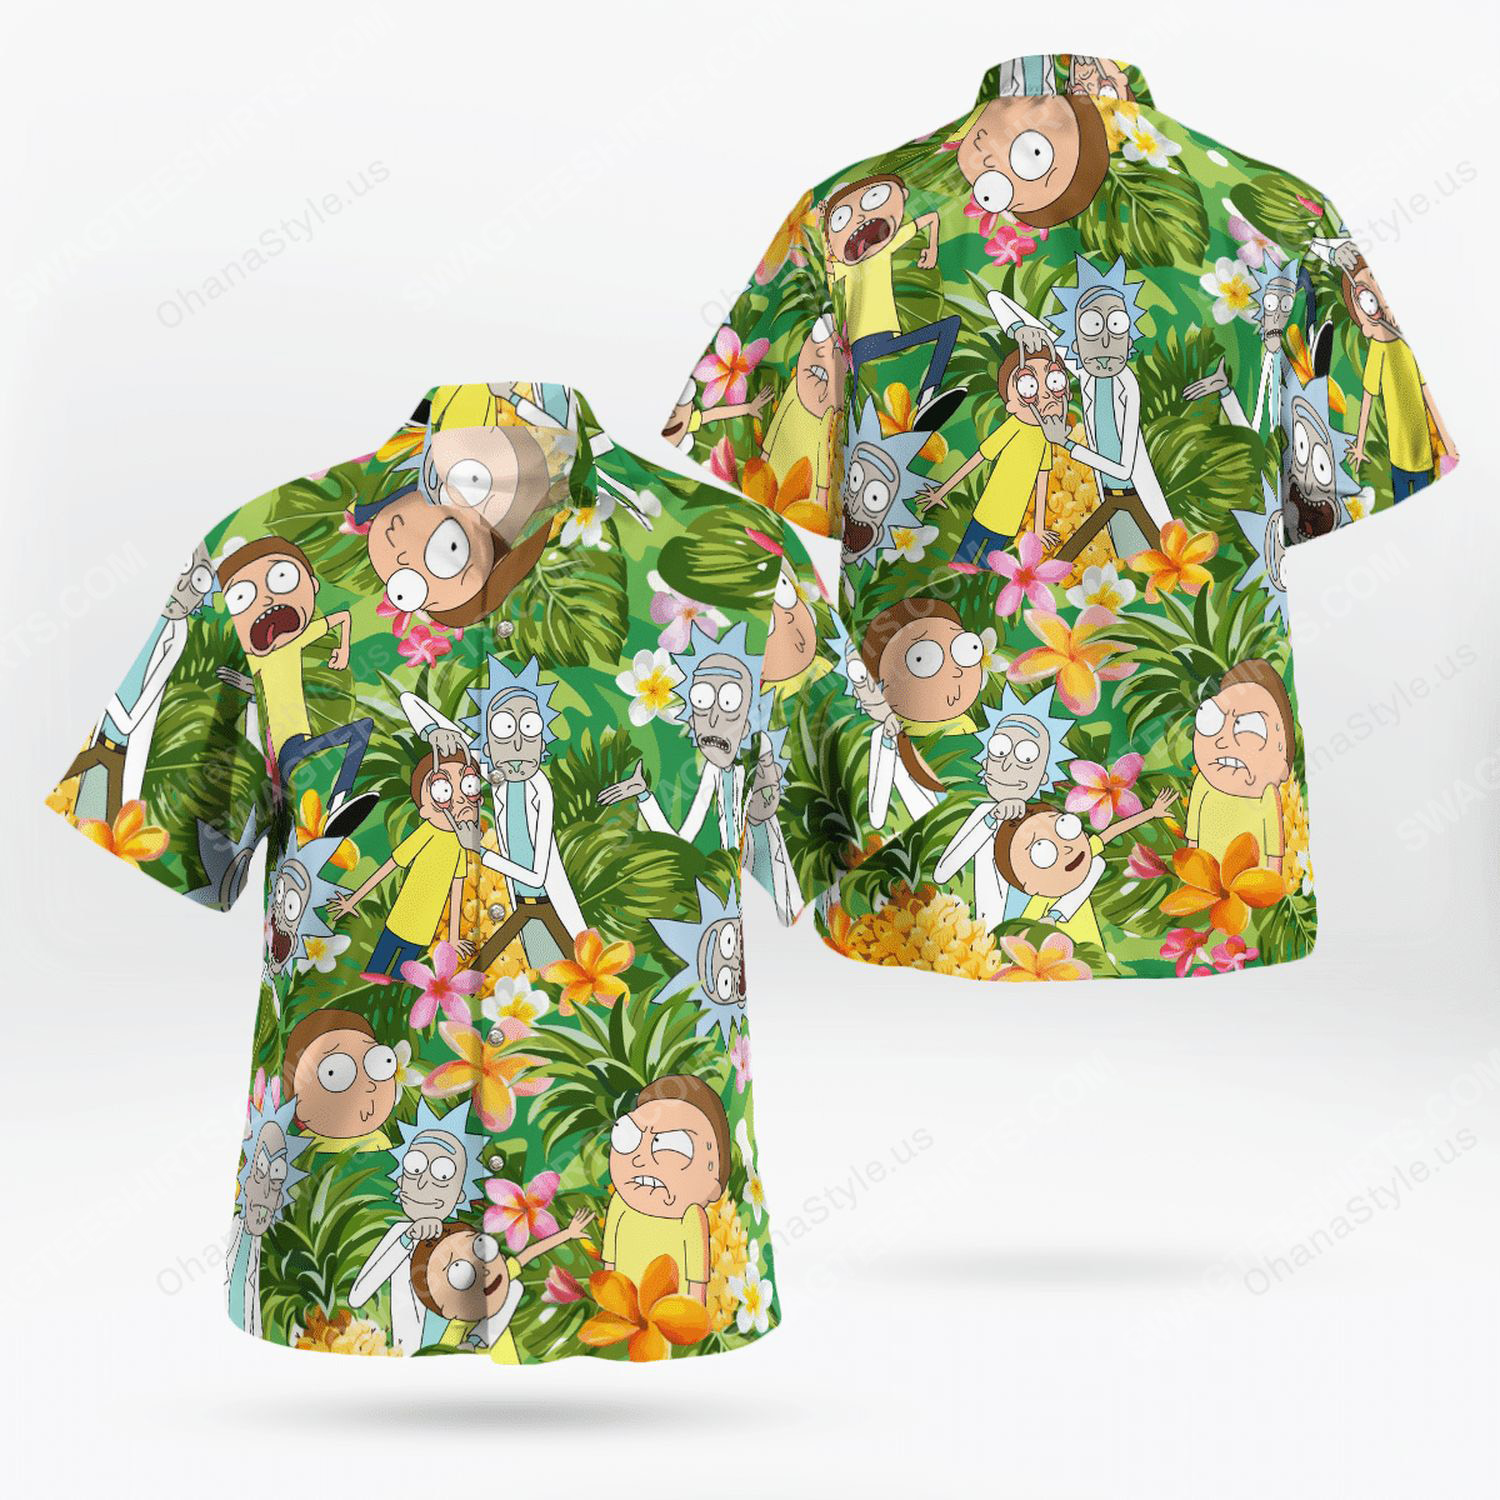 [special edition] Rick and morty tropical hawaiian shirt